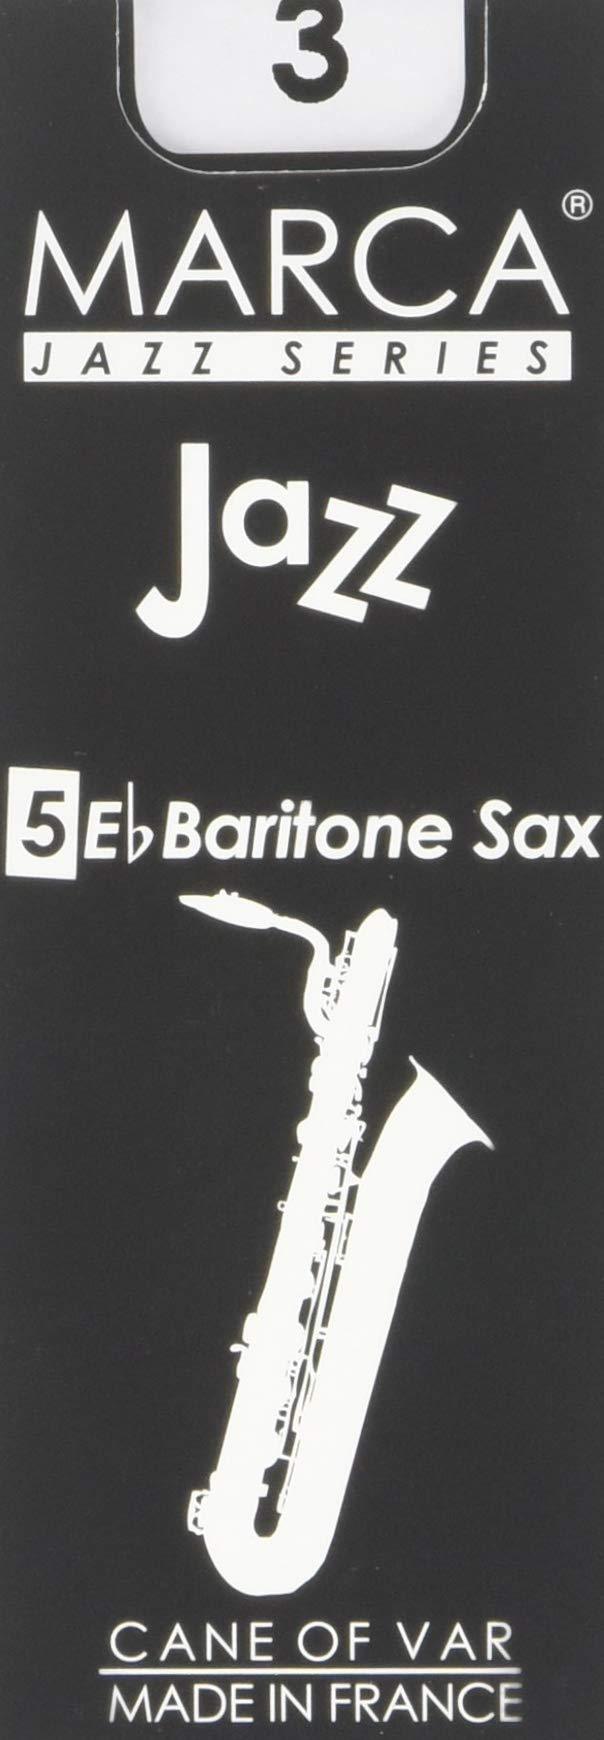 Marca Baritone Saxophone Reeds (JZ730)